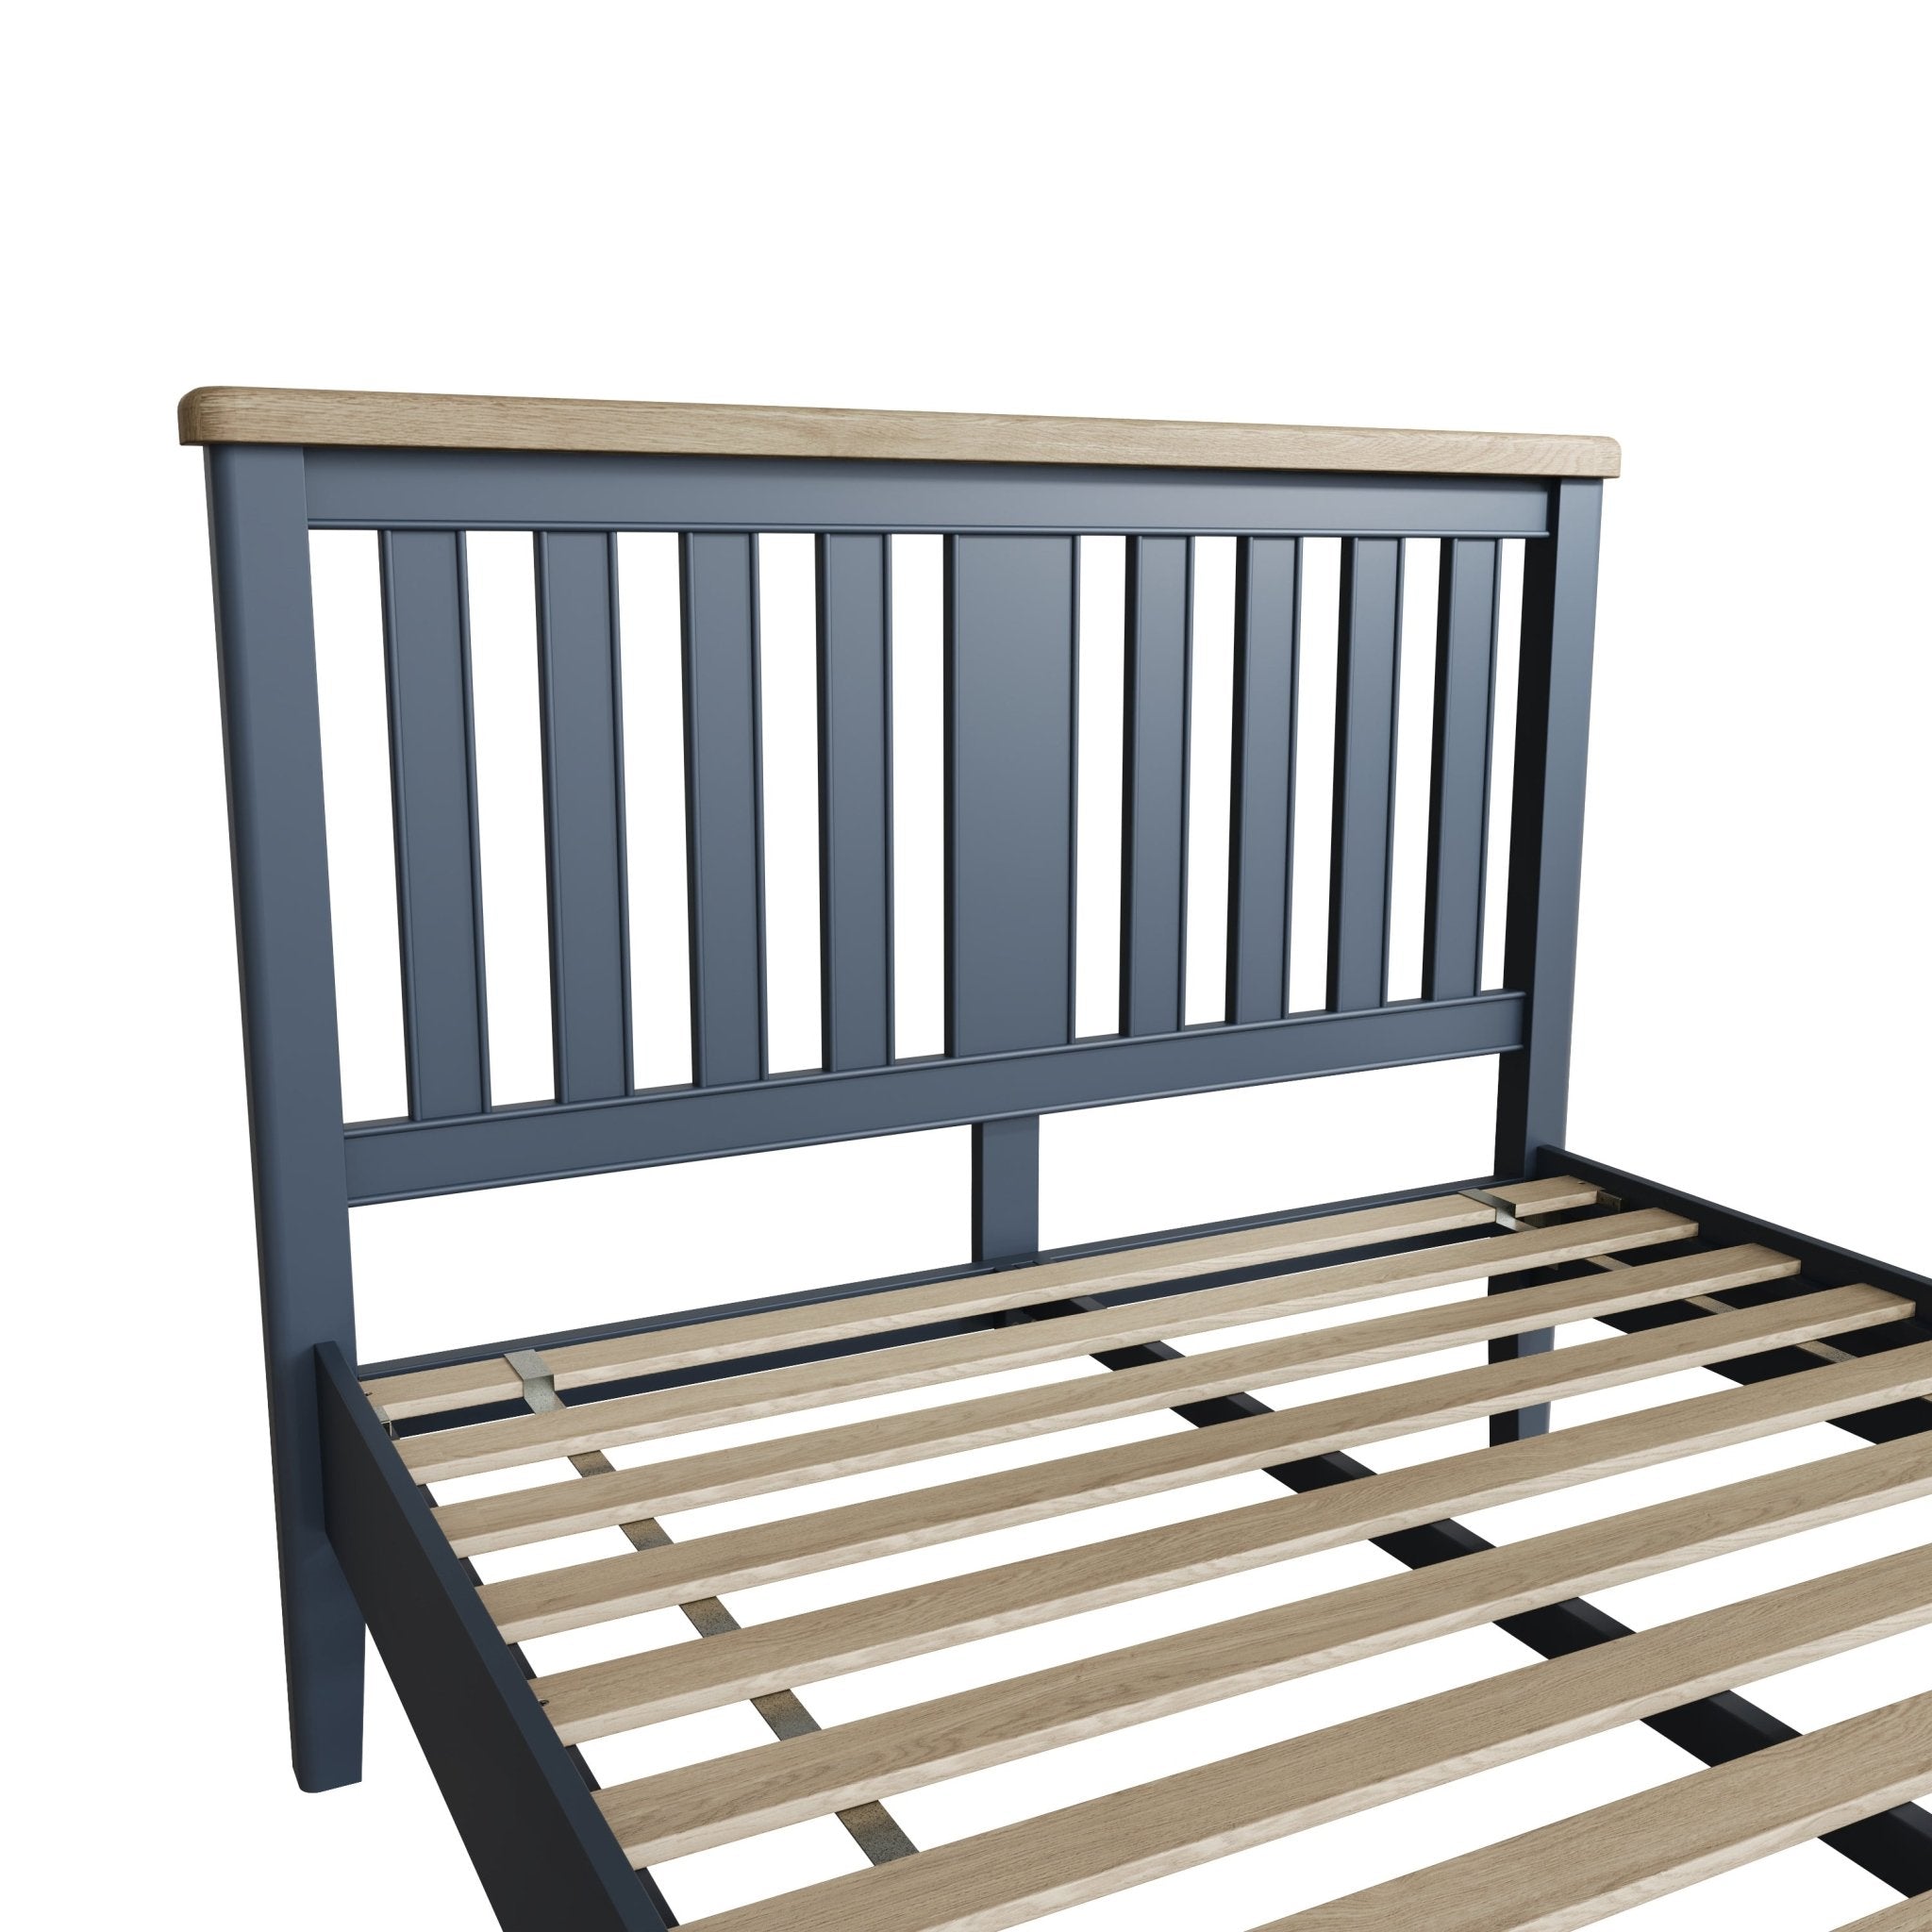 Rogate Blue 5'0 Kingsize Bed Frame - Wooden Headboard - Duck Barn Interiors